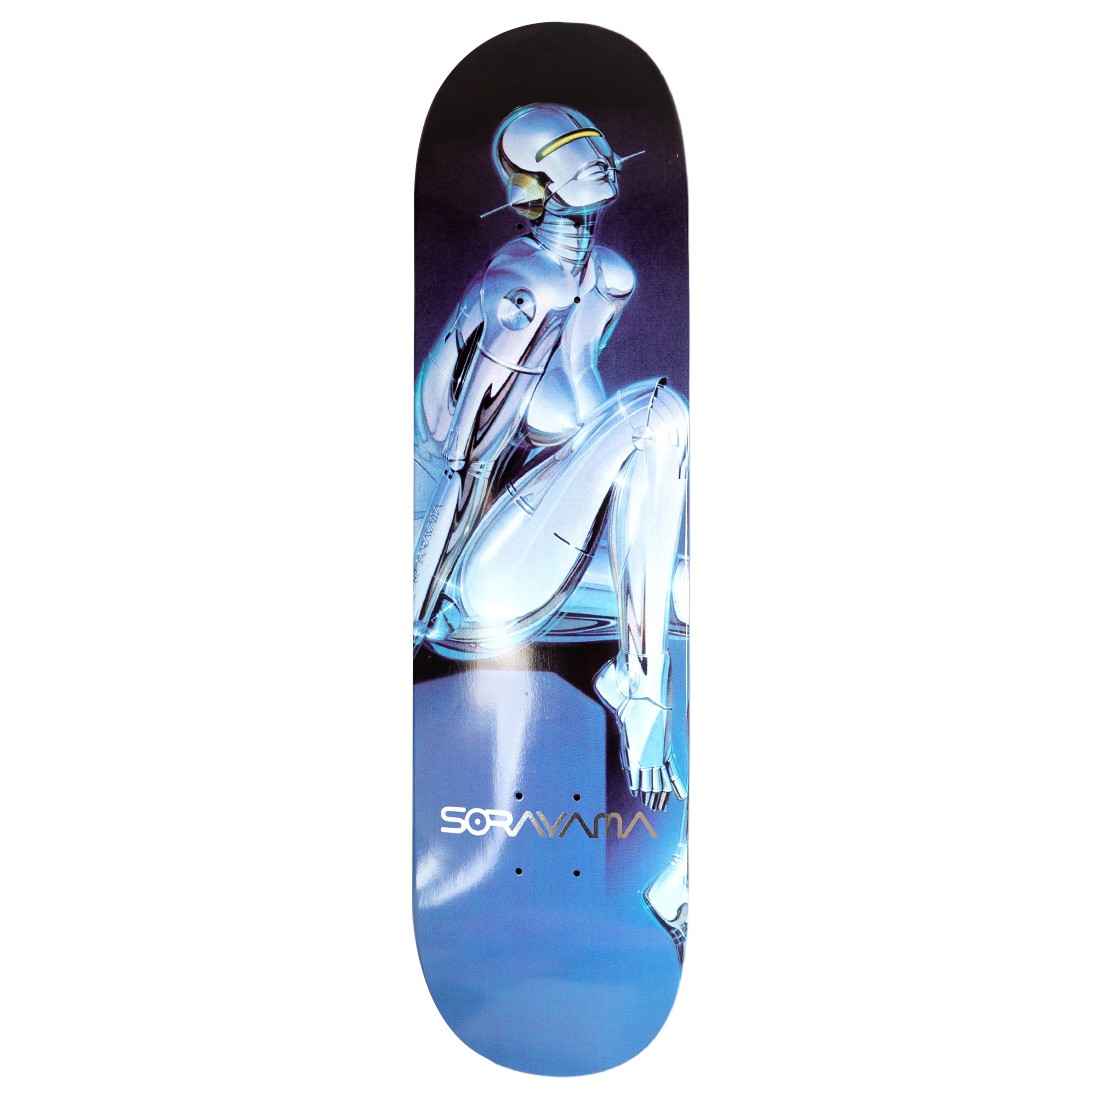 Medicom x SYNC x Hajime Sorayama Men Sexy Robot 04 Skateboard Deck (blue)